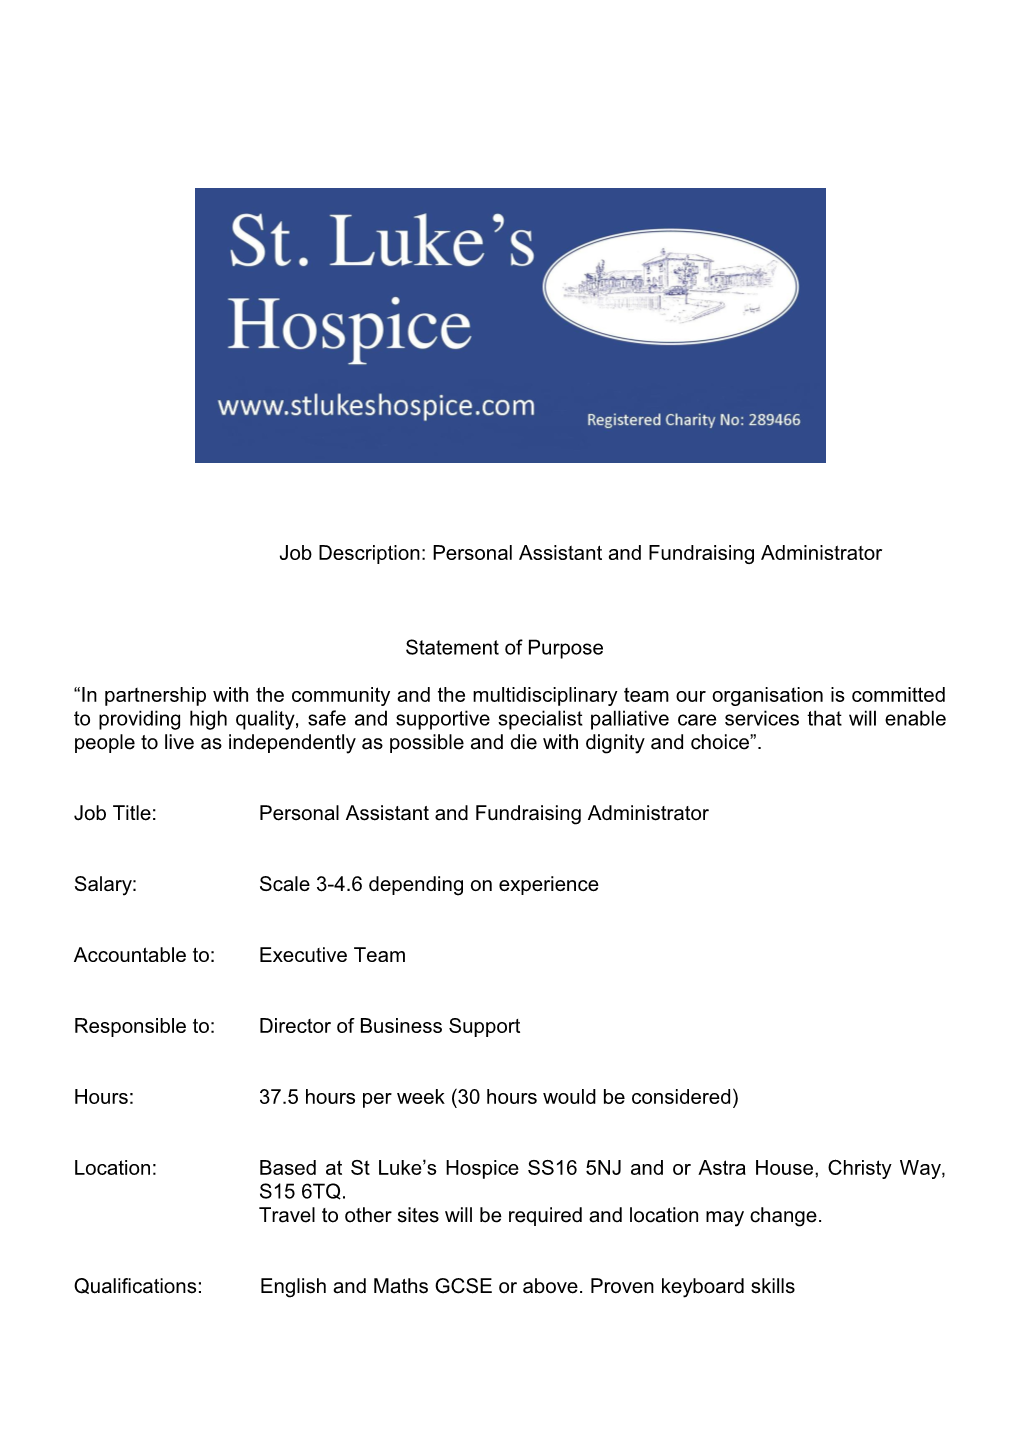 Job Description: Personal Assistant and Fundraising Administrator